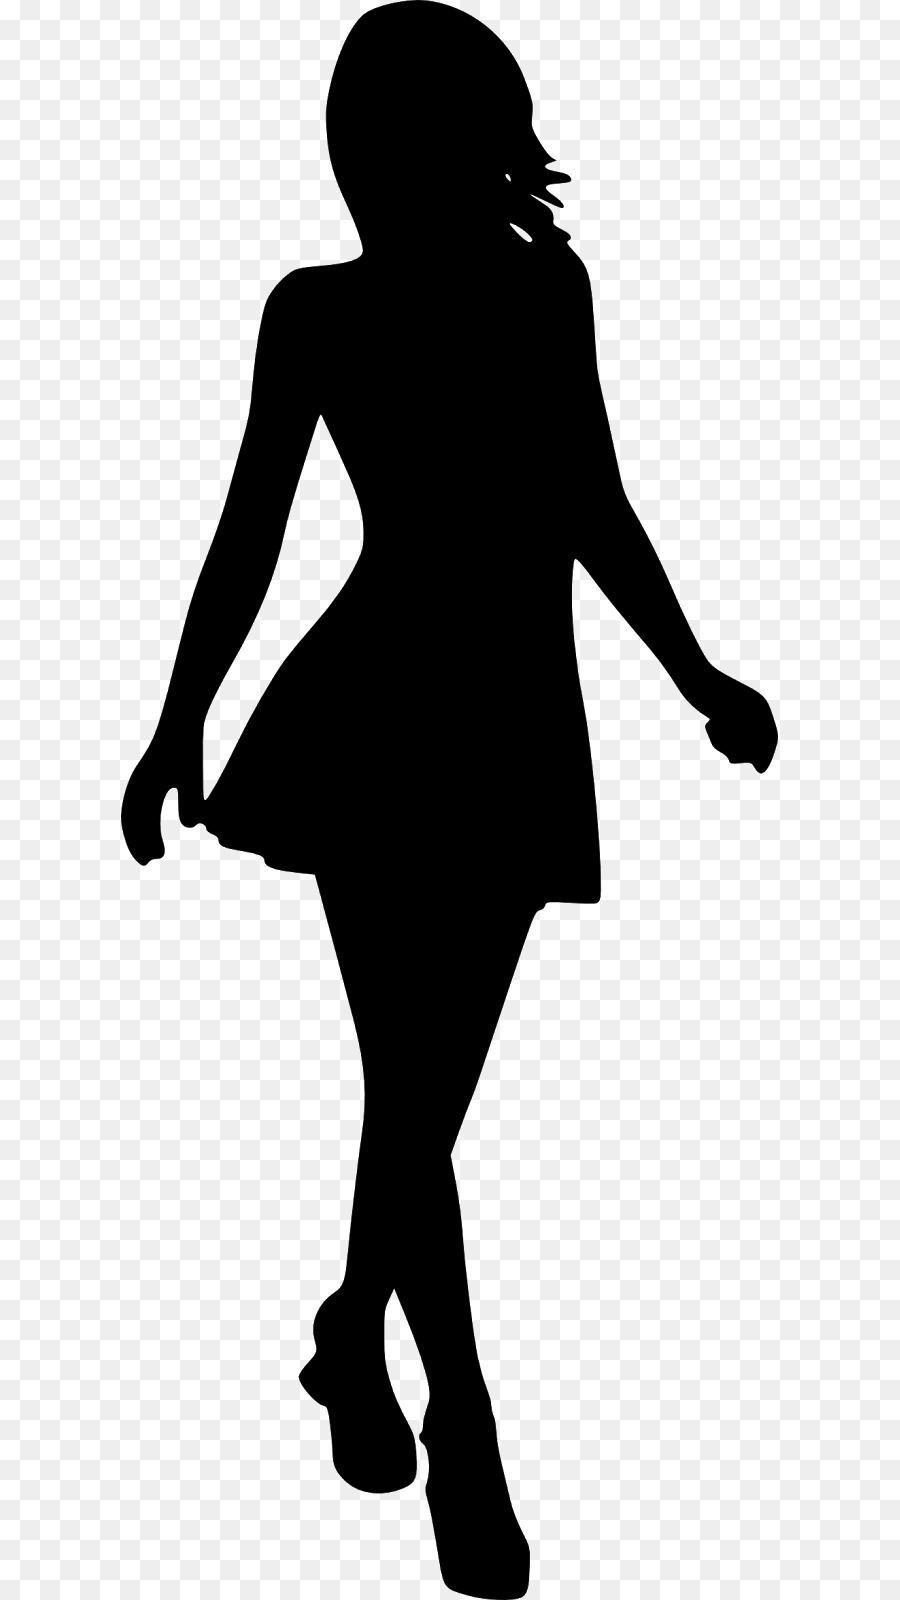 Woman Silhouette Clip art - fashion labels png download - 657*1600 - Free Transparent Woman png Download.